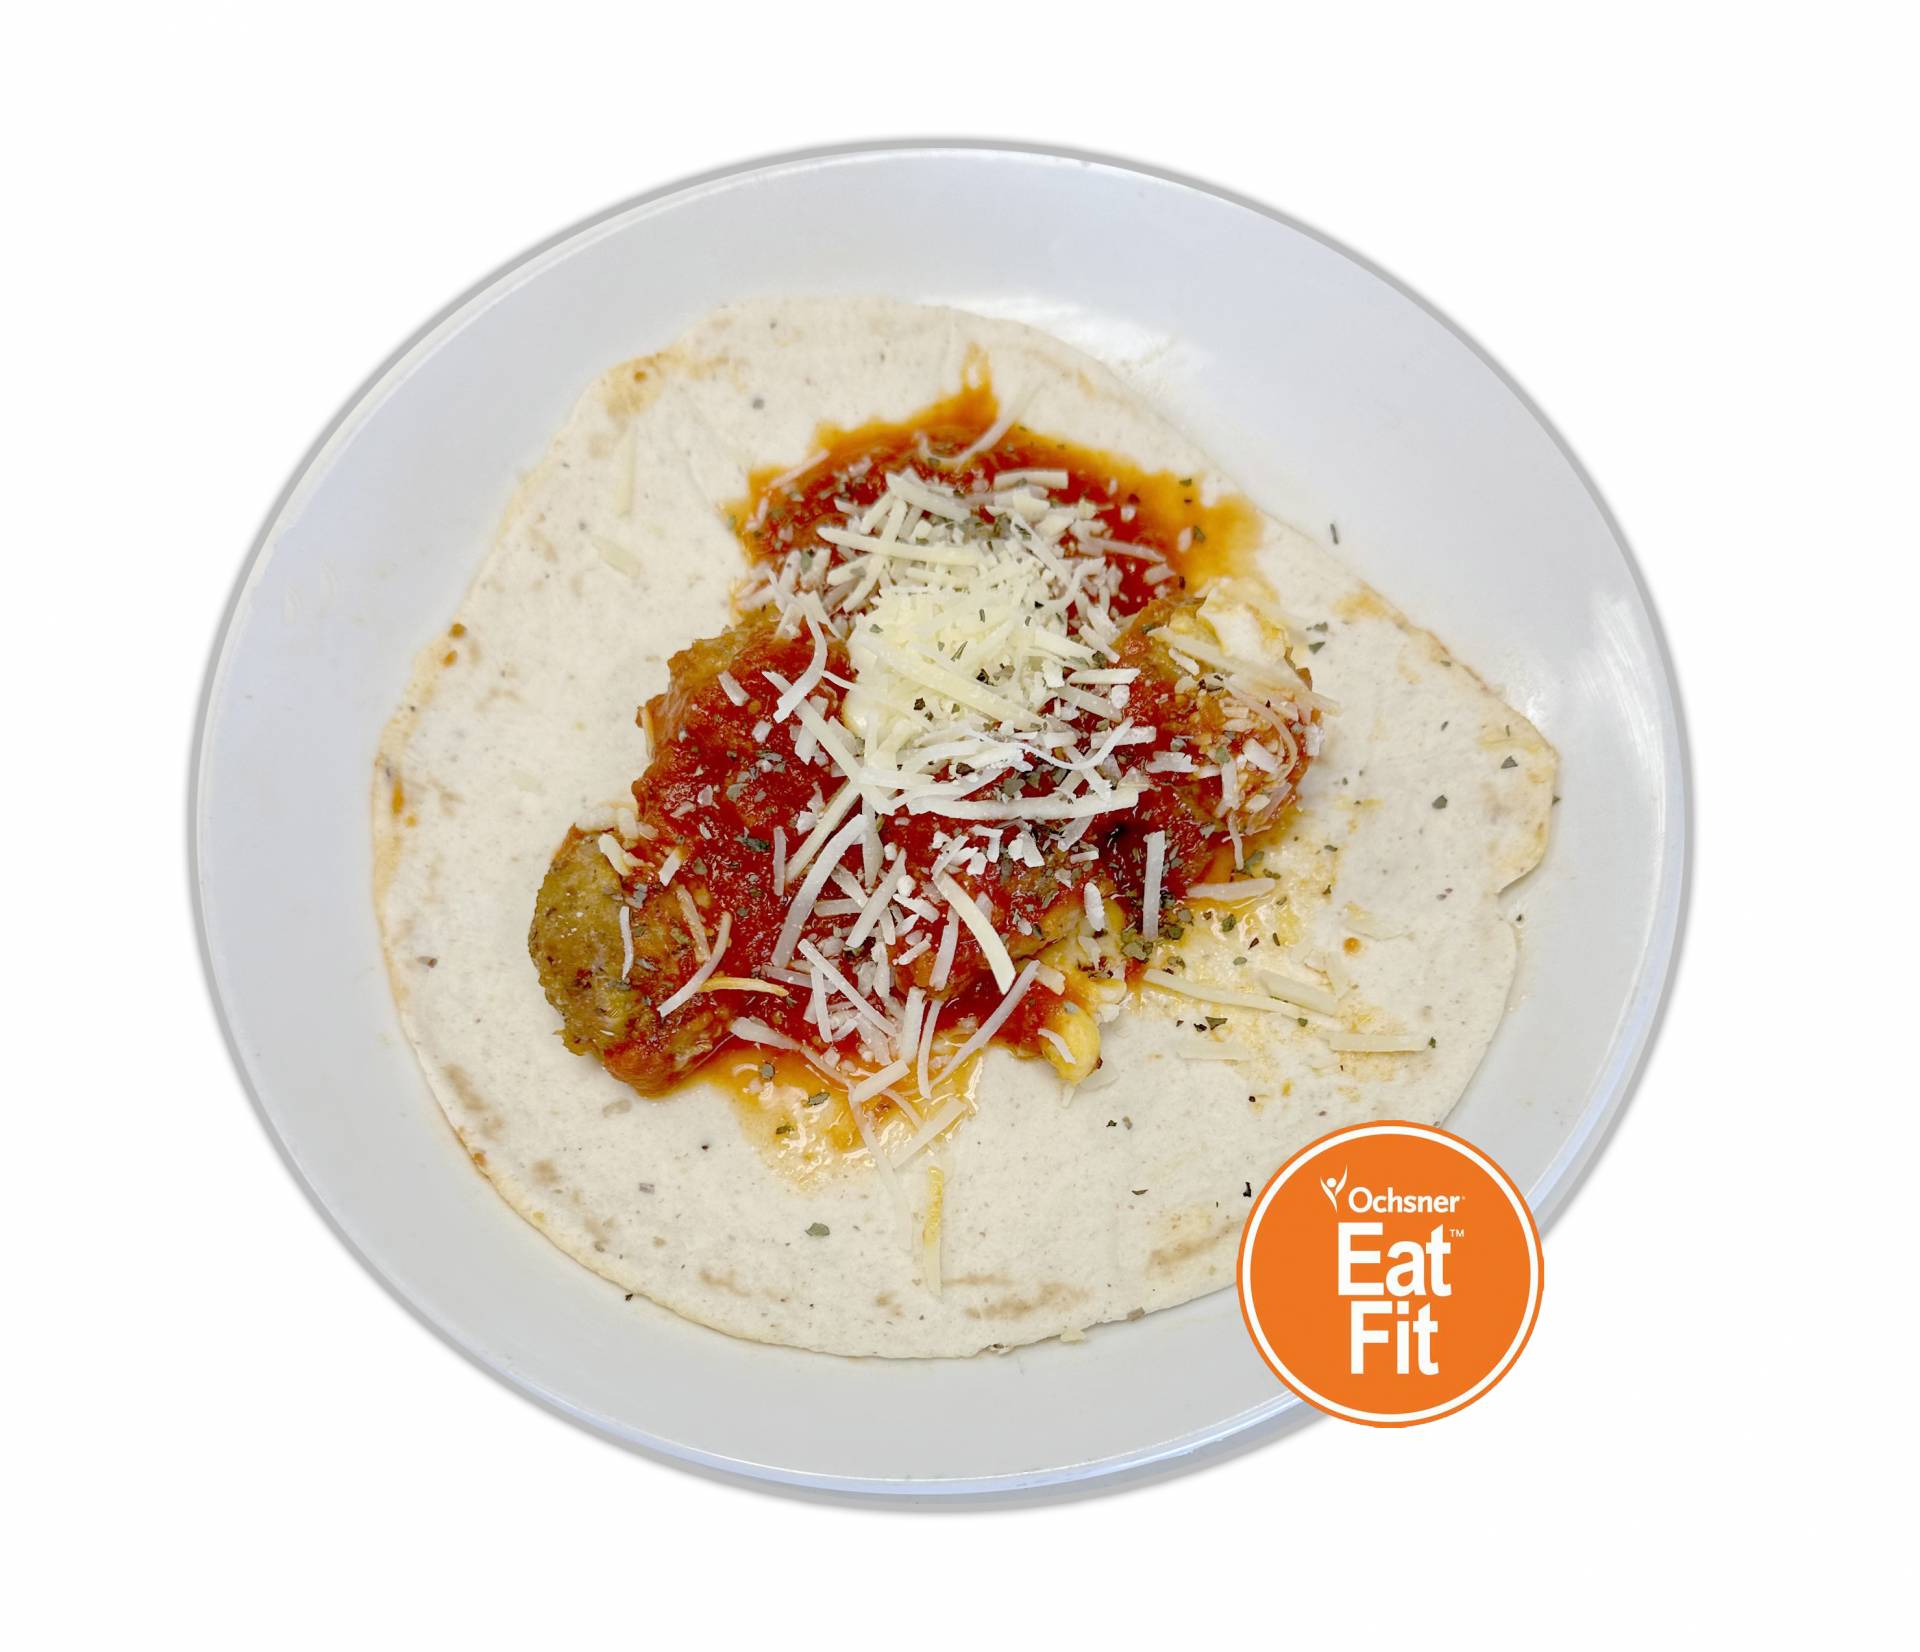 Italian Turkey Meatball Wrap with Premium Marinara Sauce - Low Fat